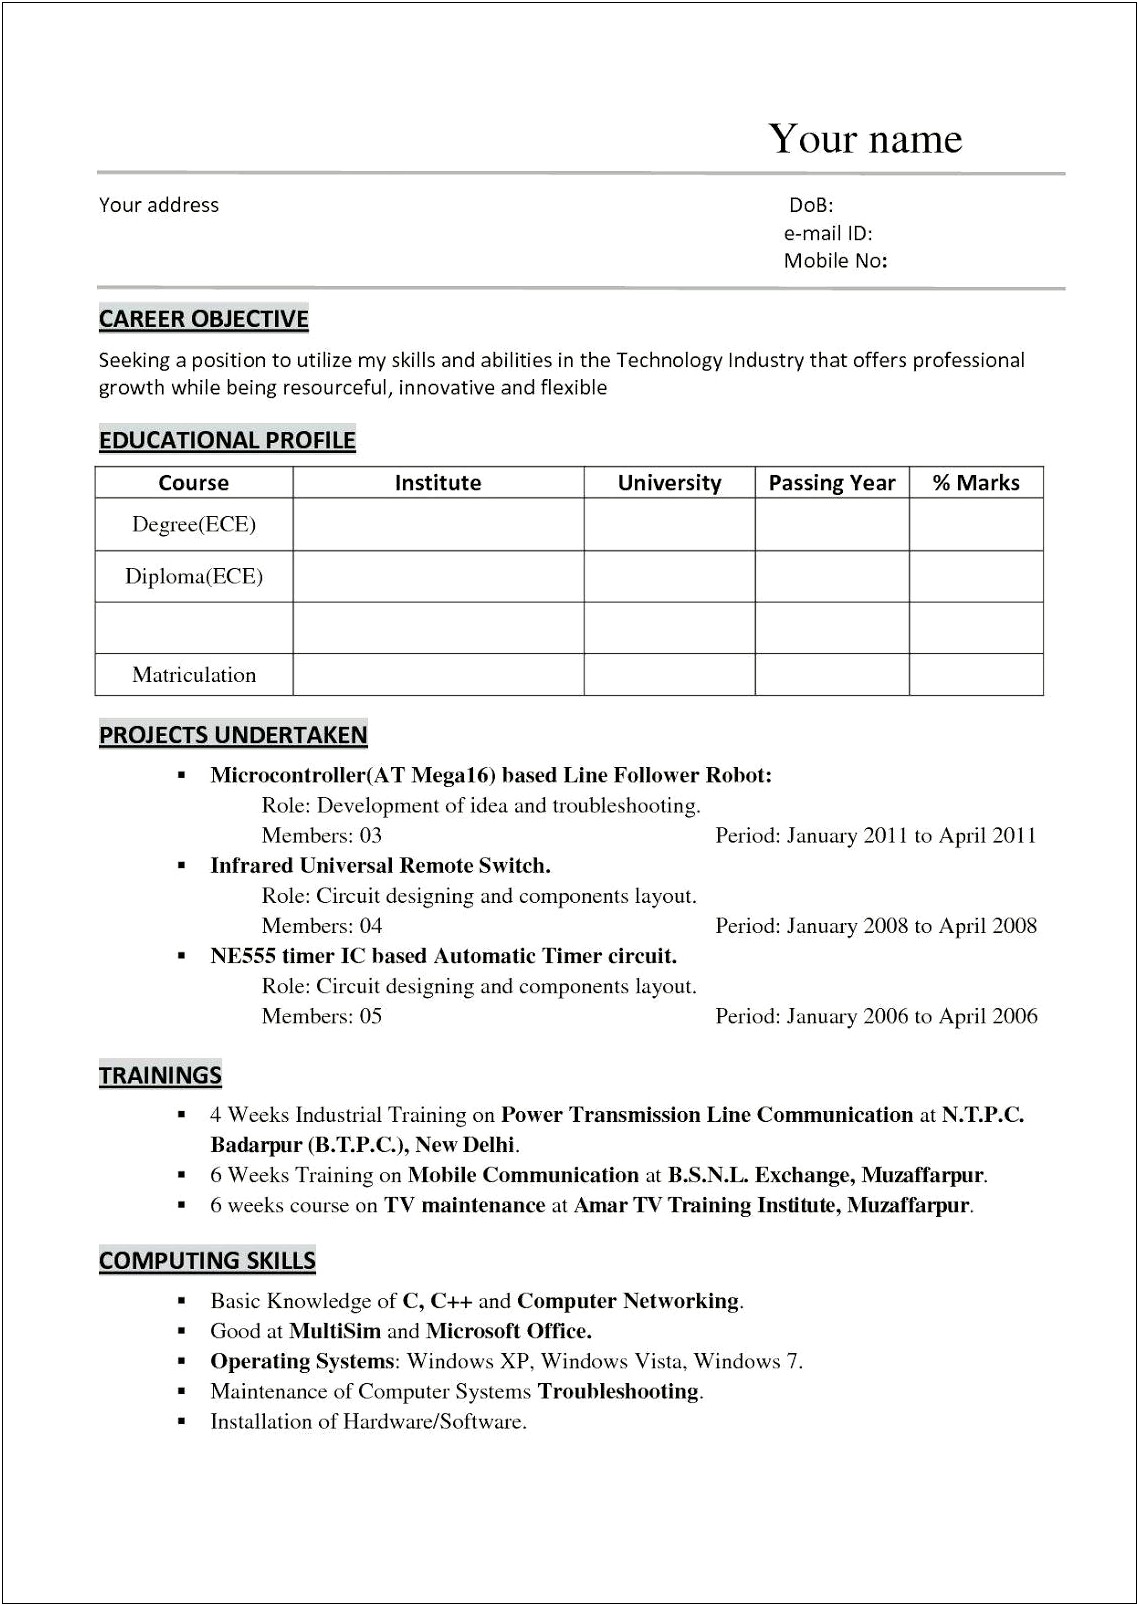 Sample Resume For Mechanical Engineer Fresh Graduate Pdf